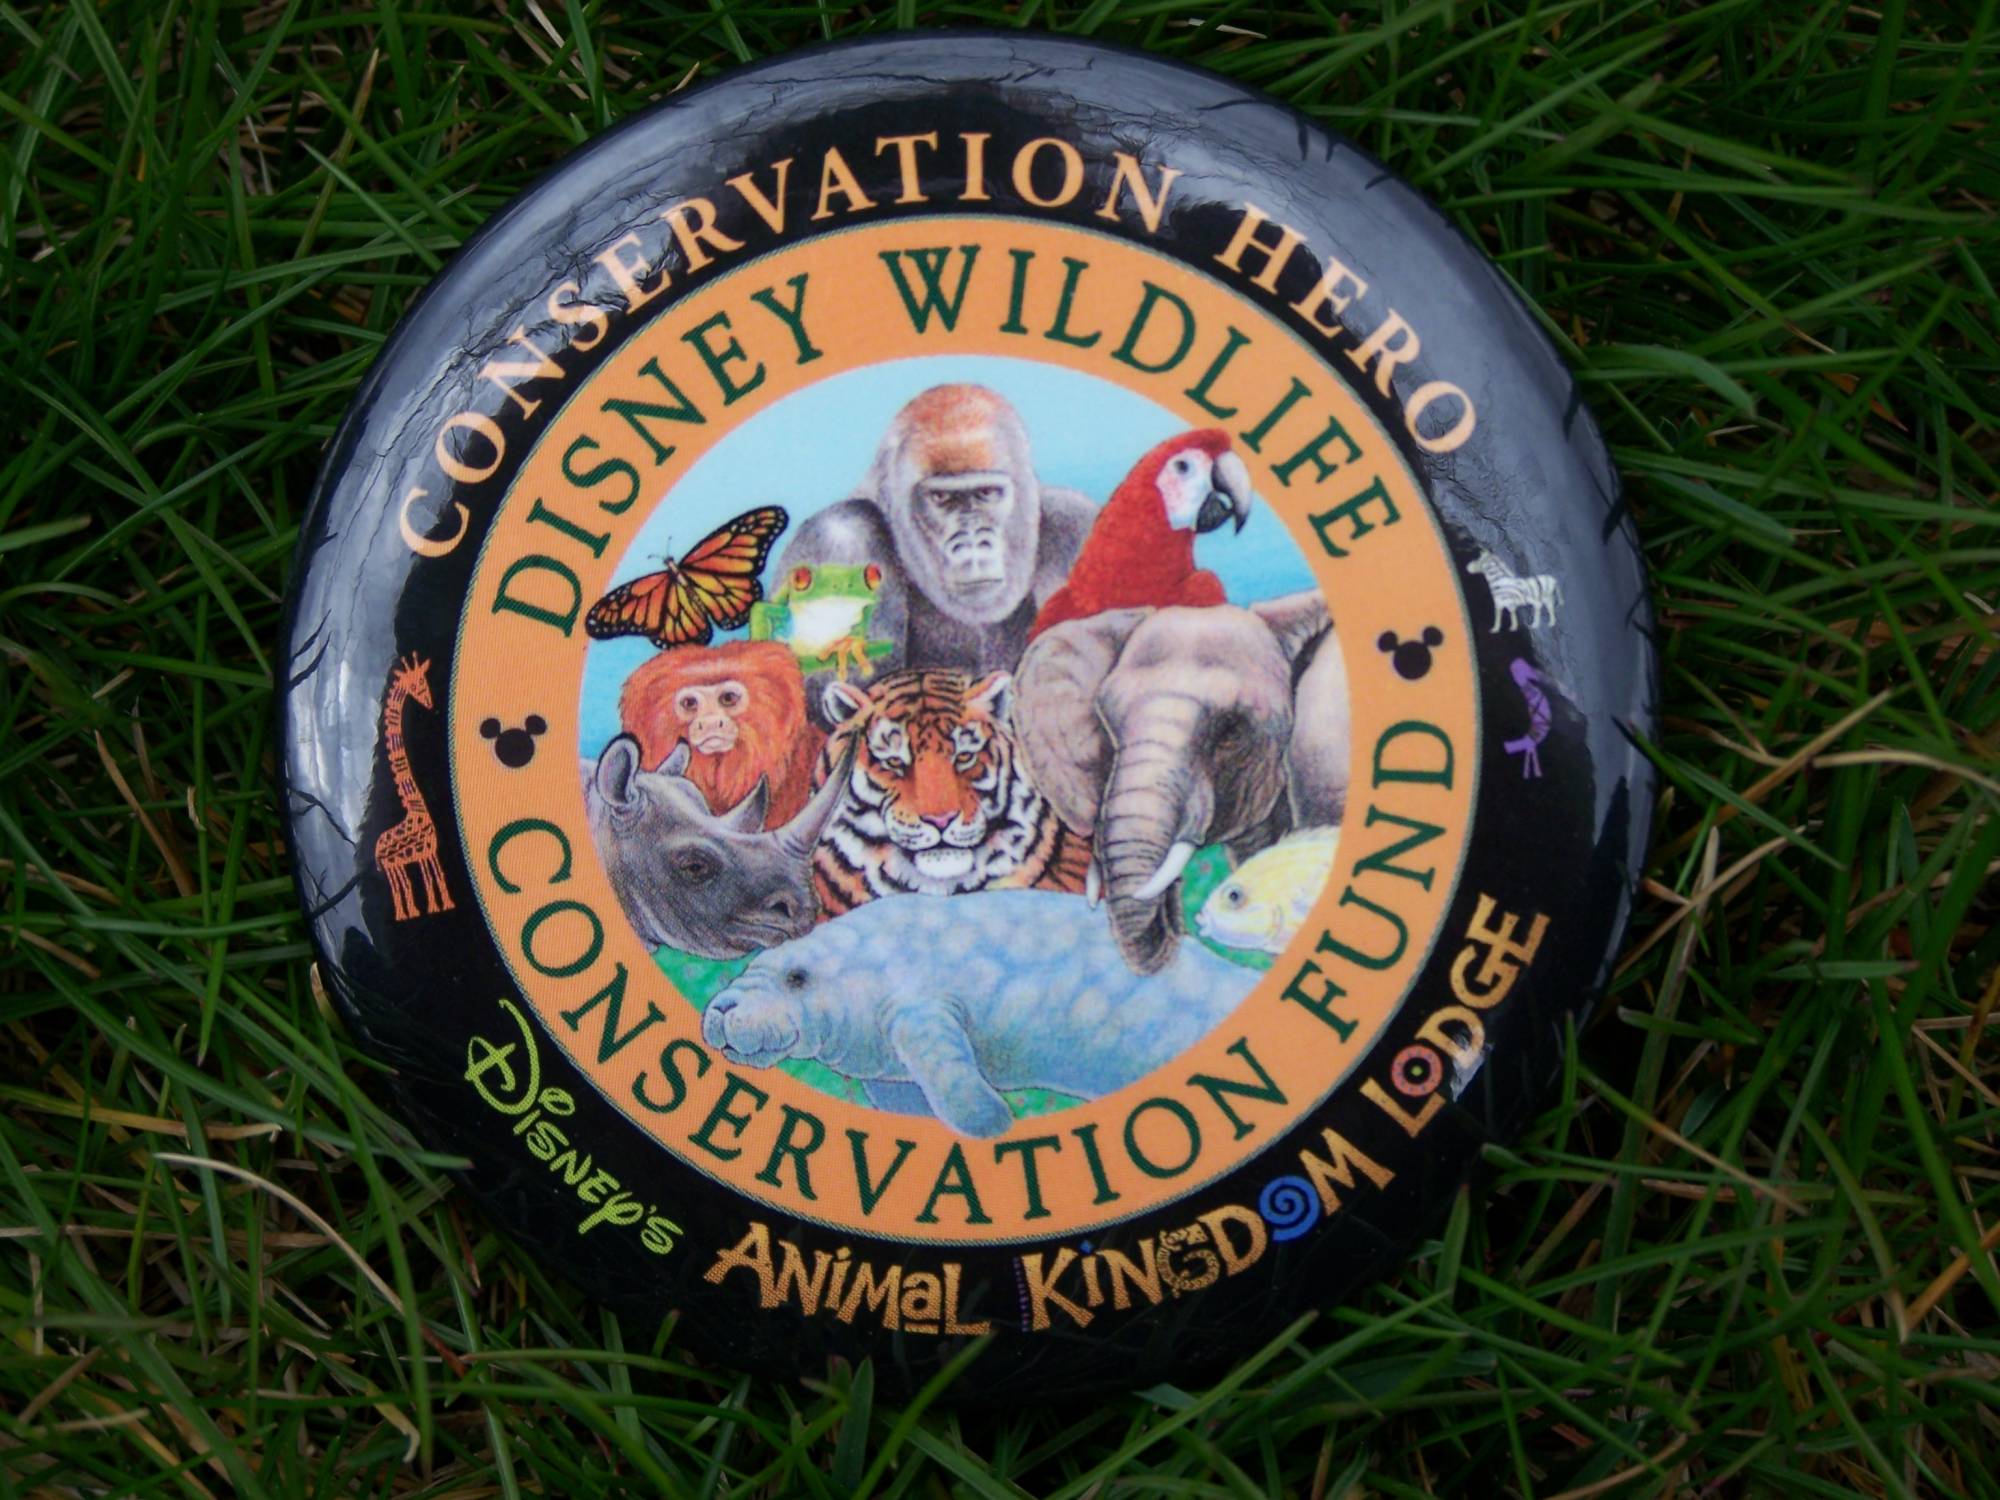 Disney Worldwide Conservation pin